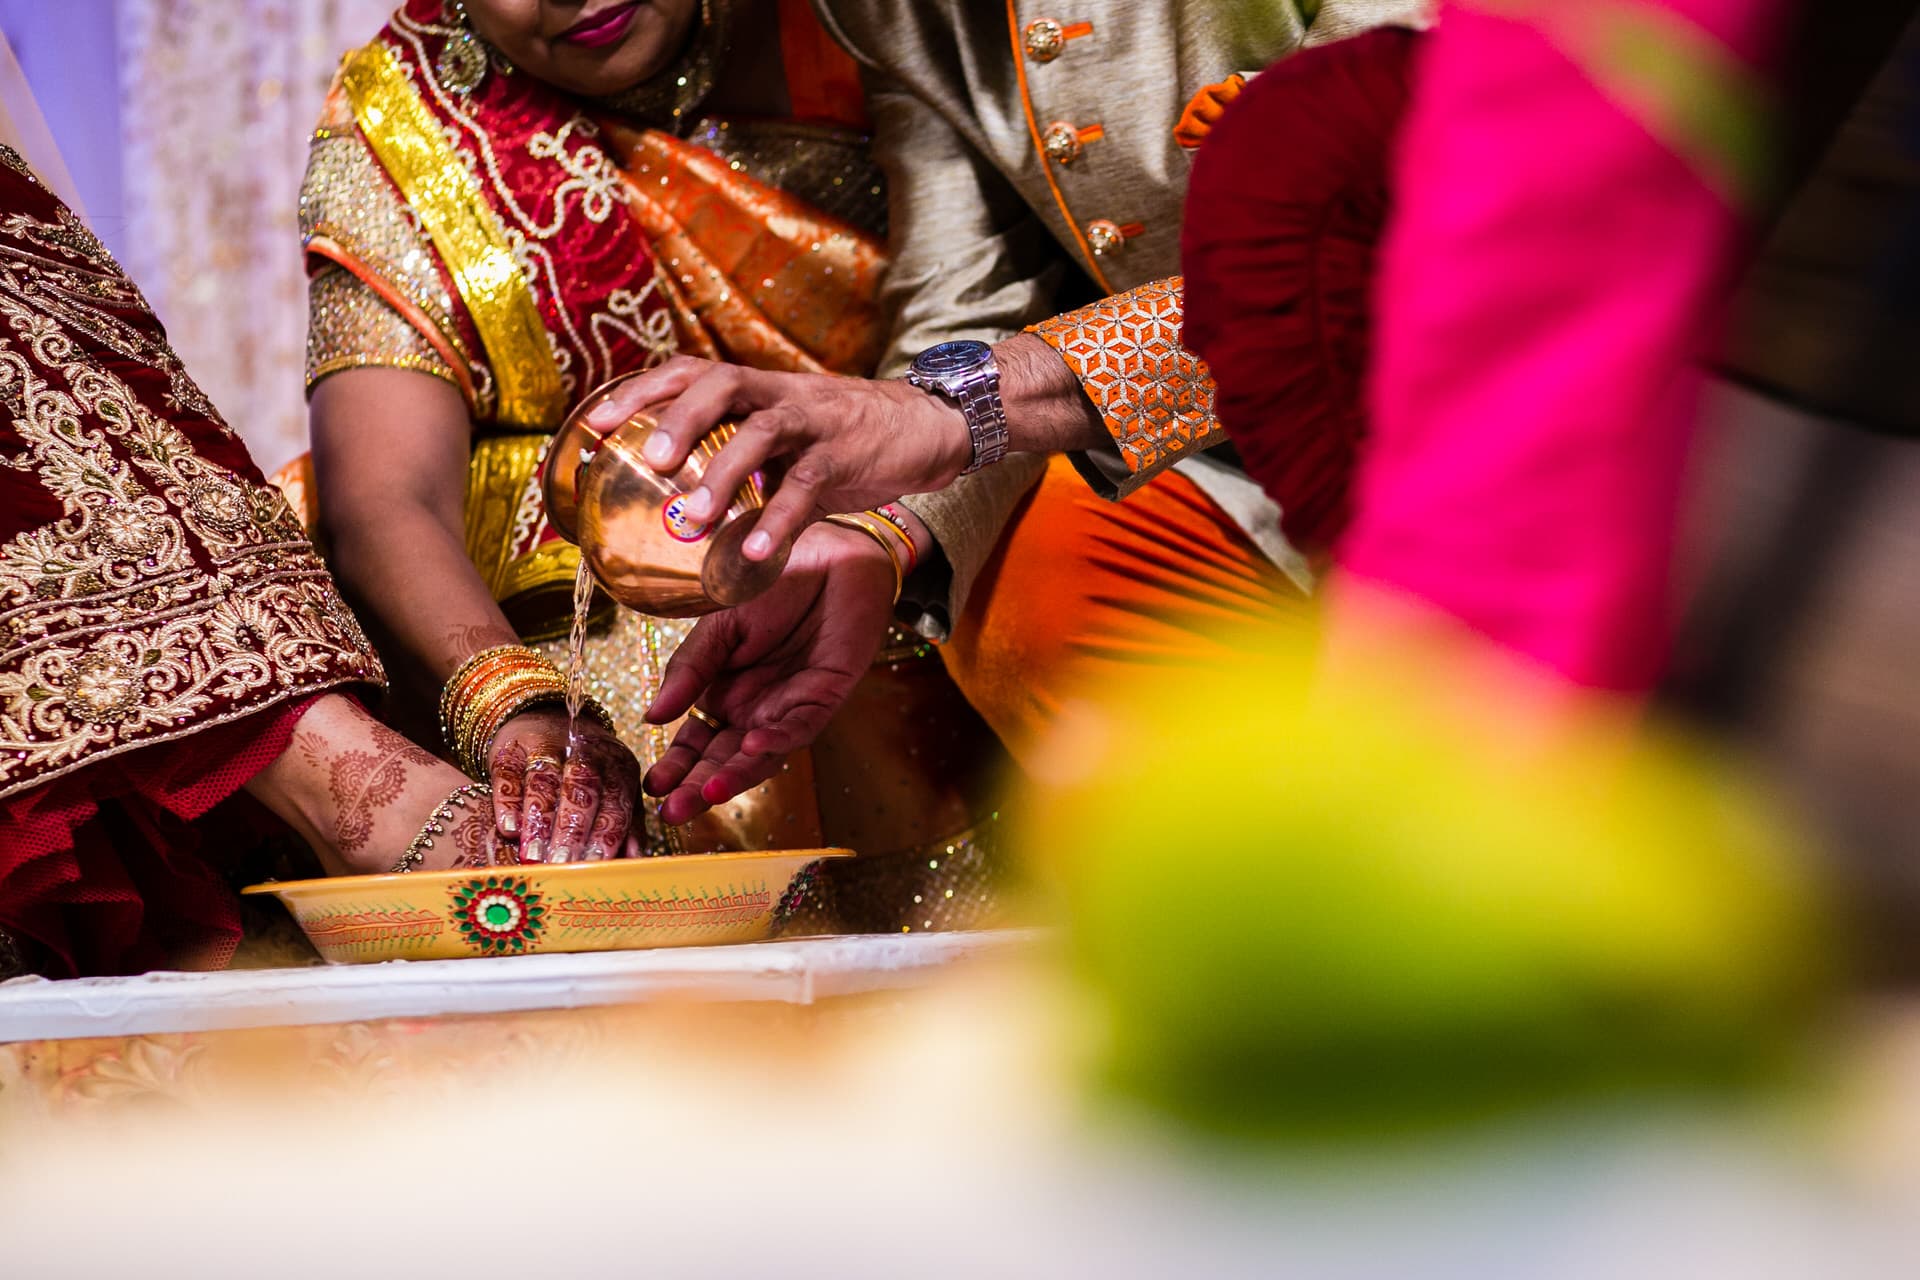 Feet washing ceremony during Hindu Wedding